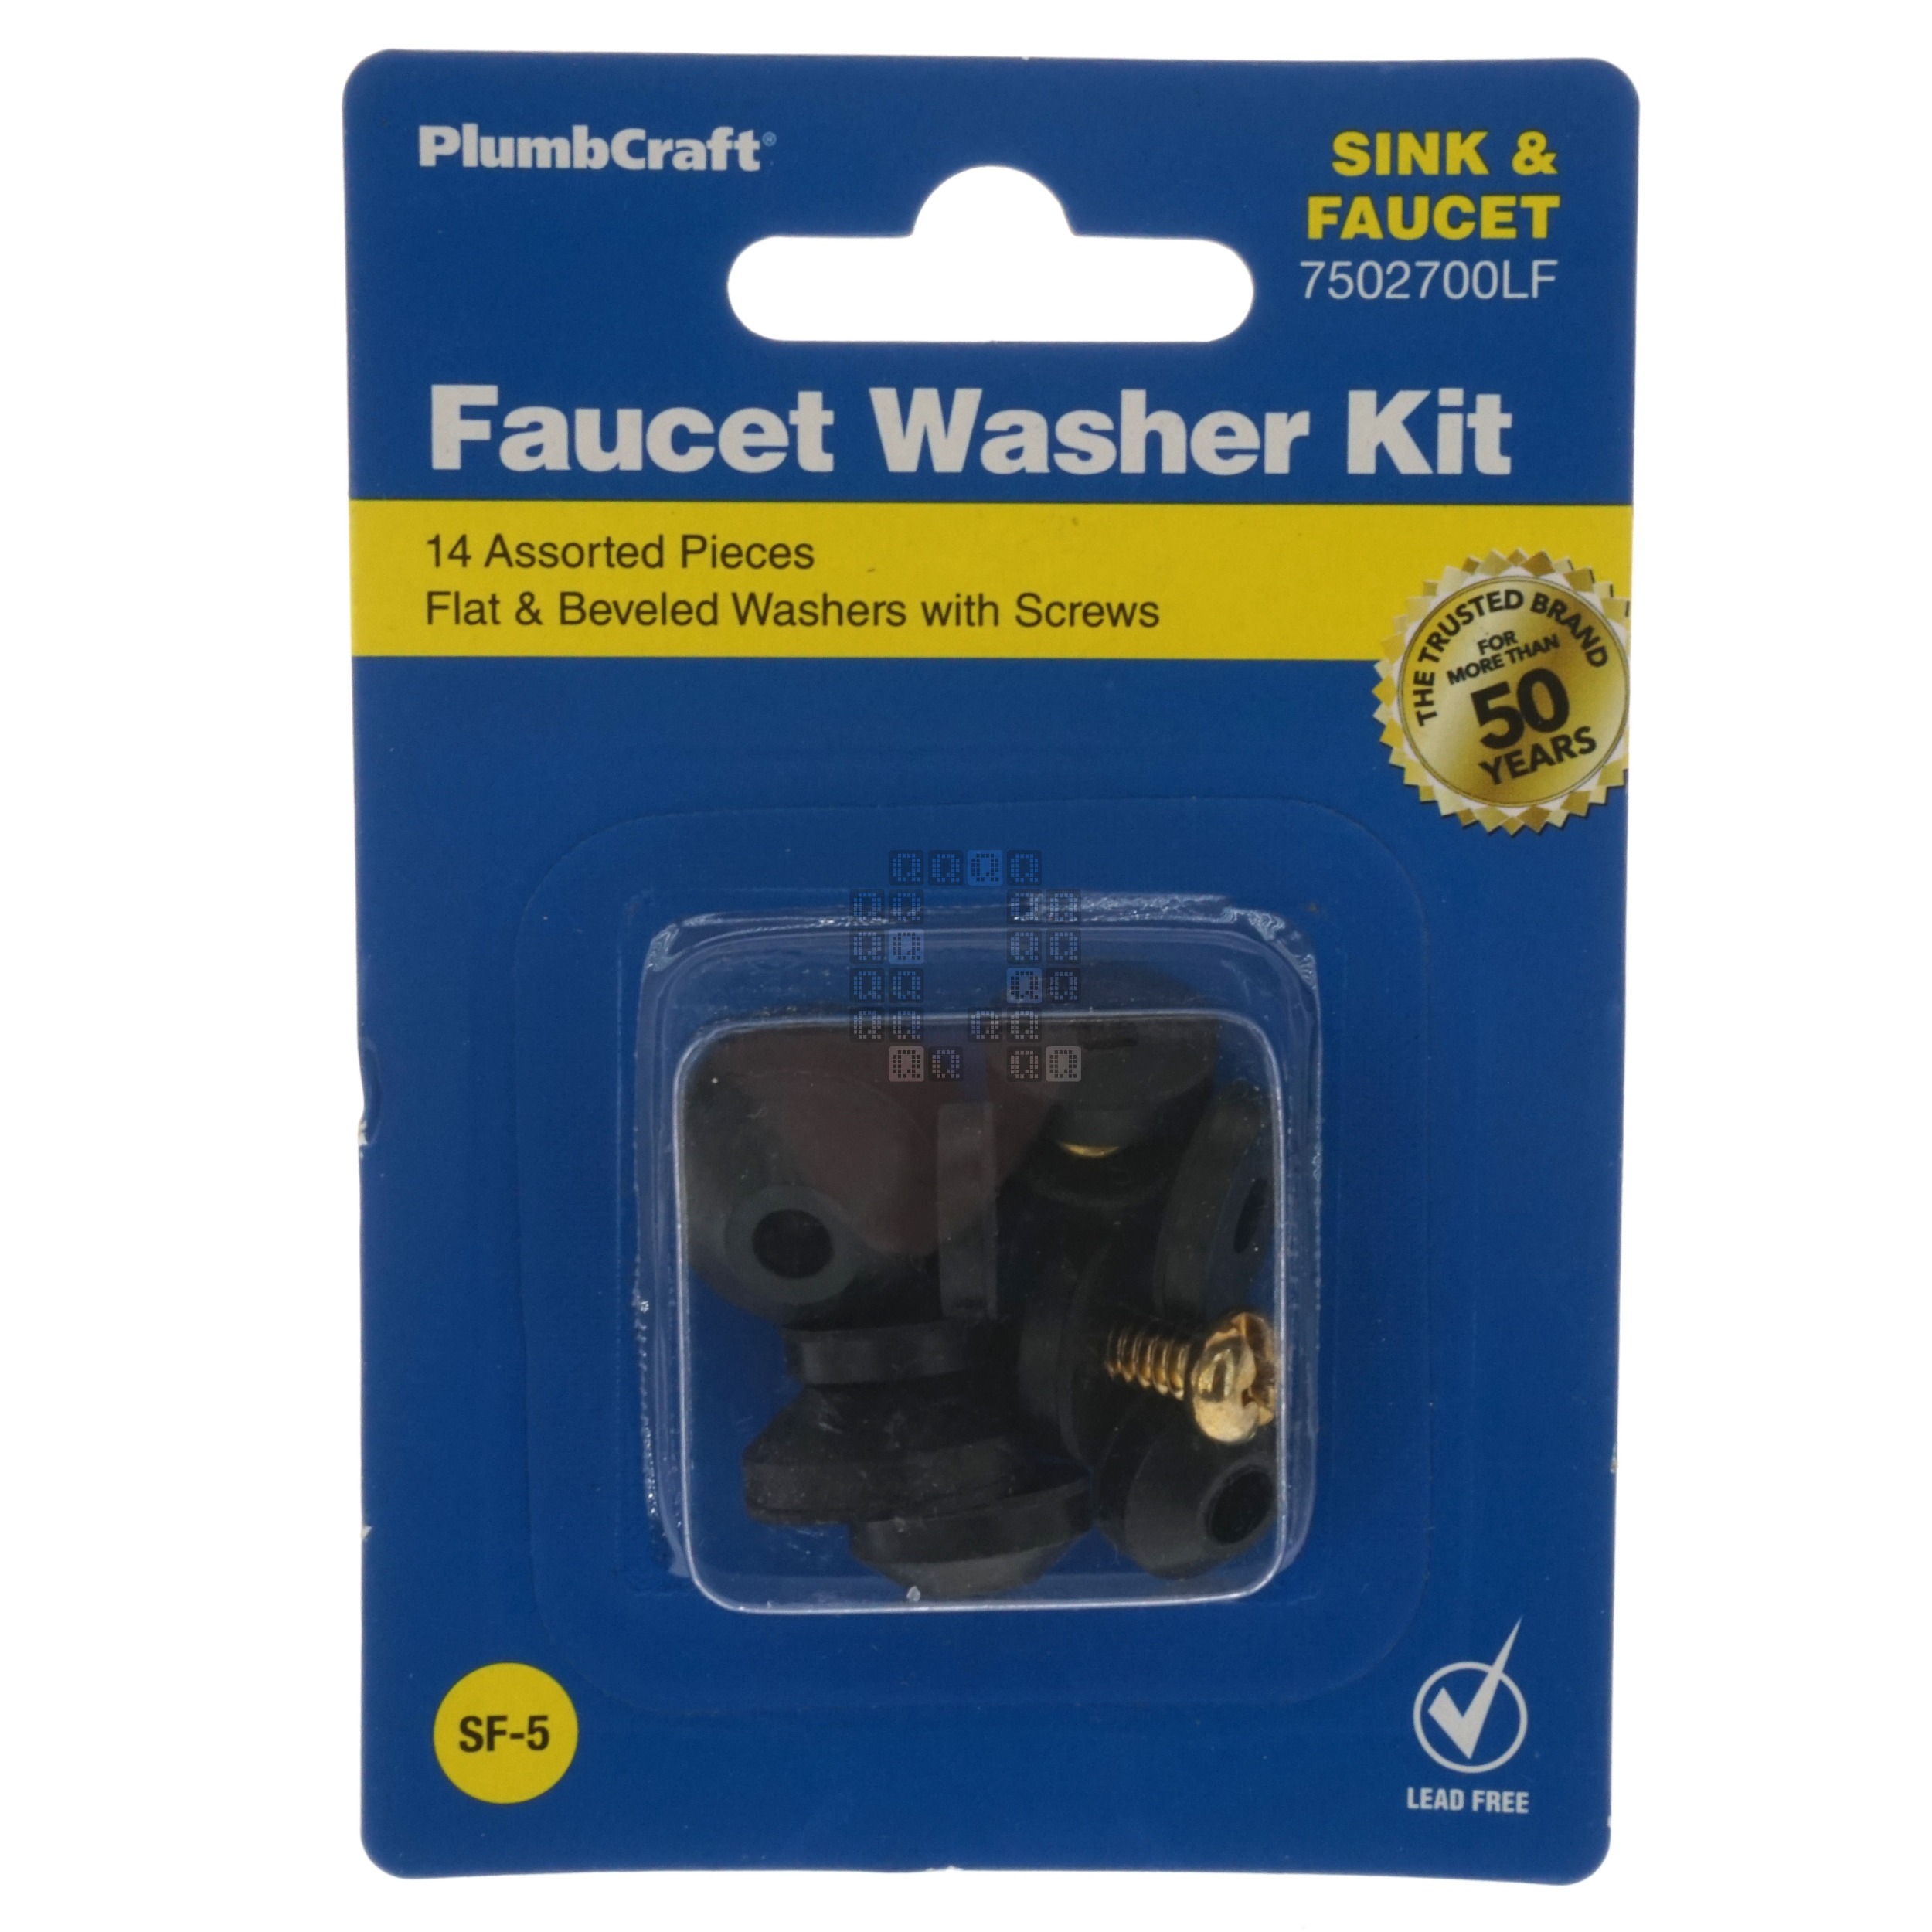 PlumbCraft 7502700LF 14-Piece Flat & Beveled Faucet Washer Kit with Screws